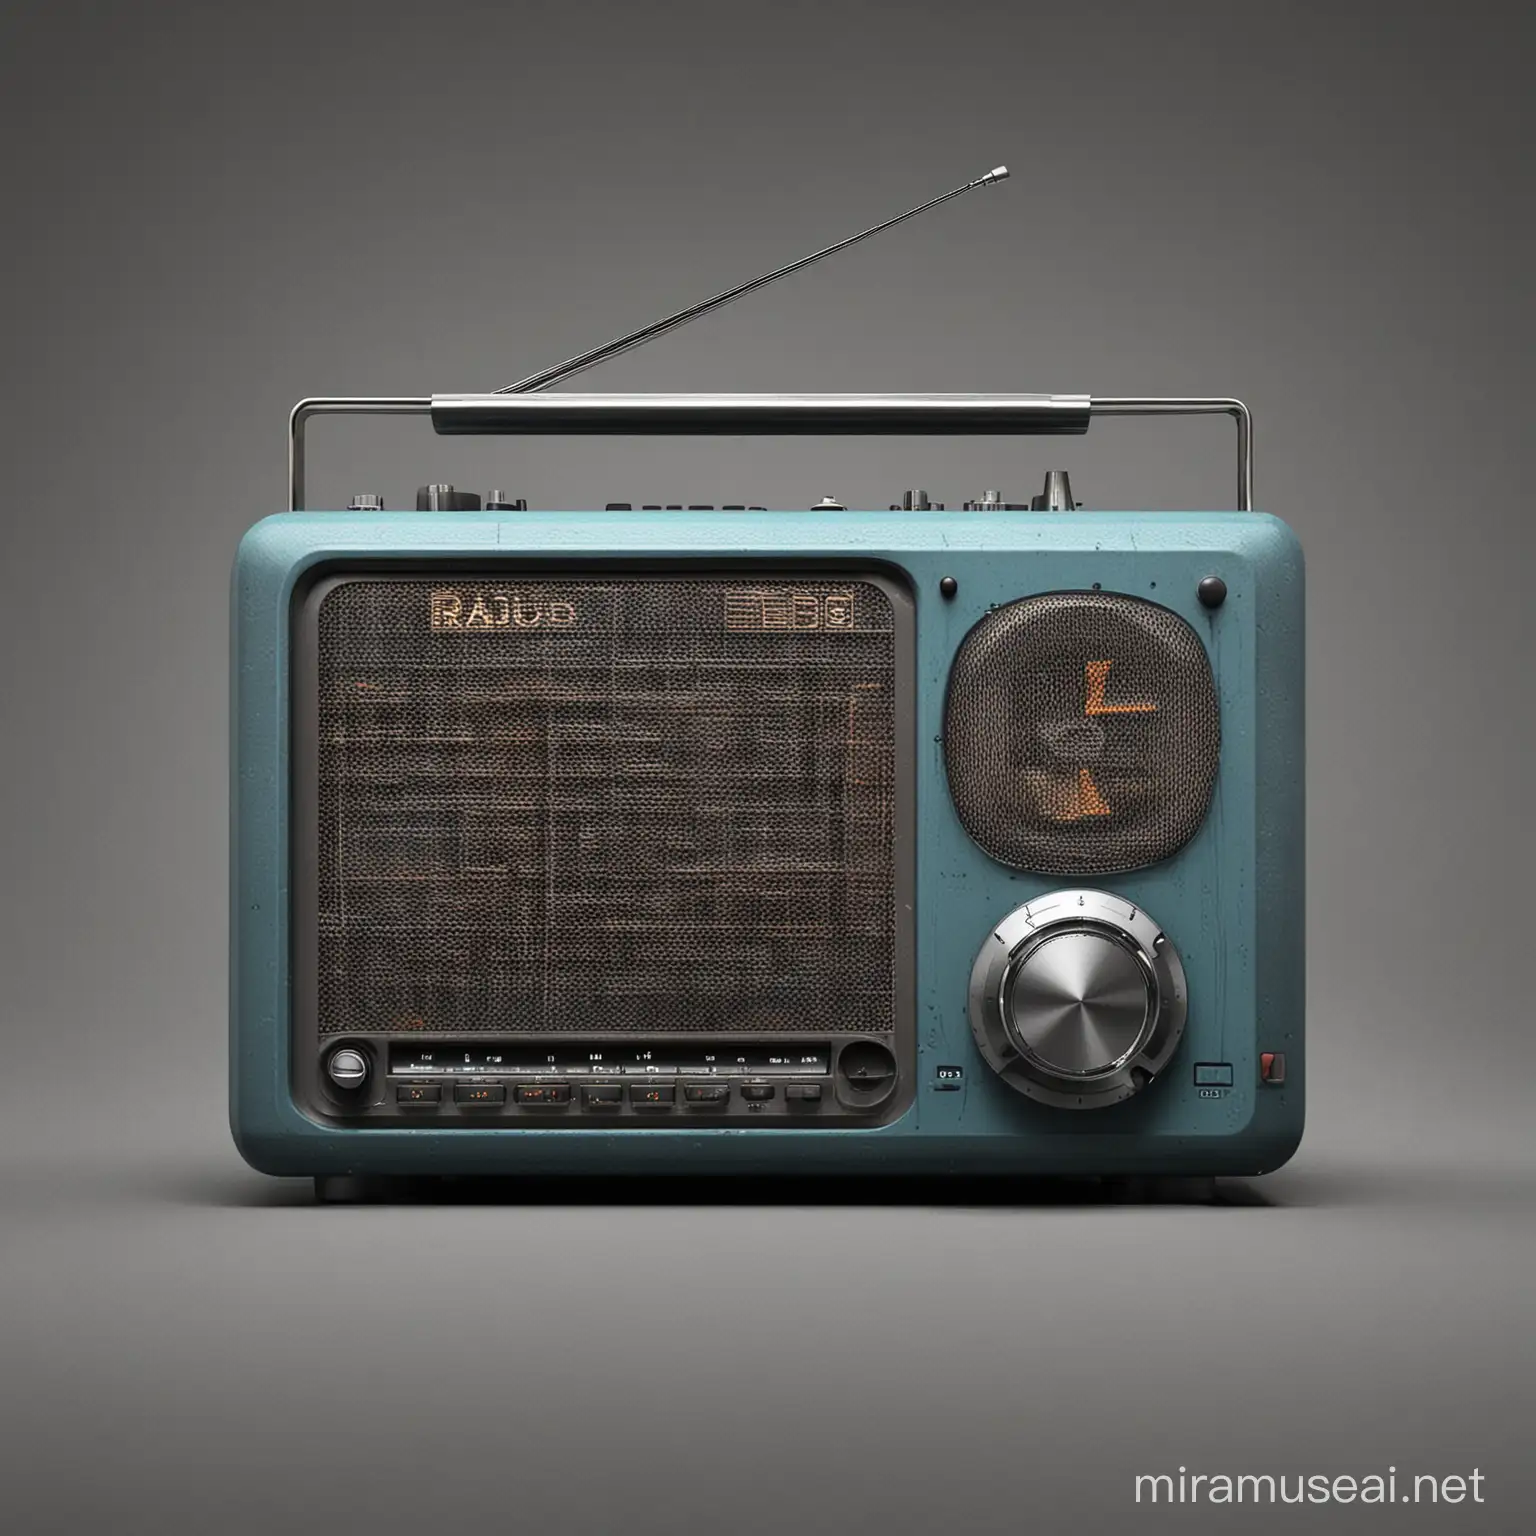 create a image of radio
